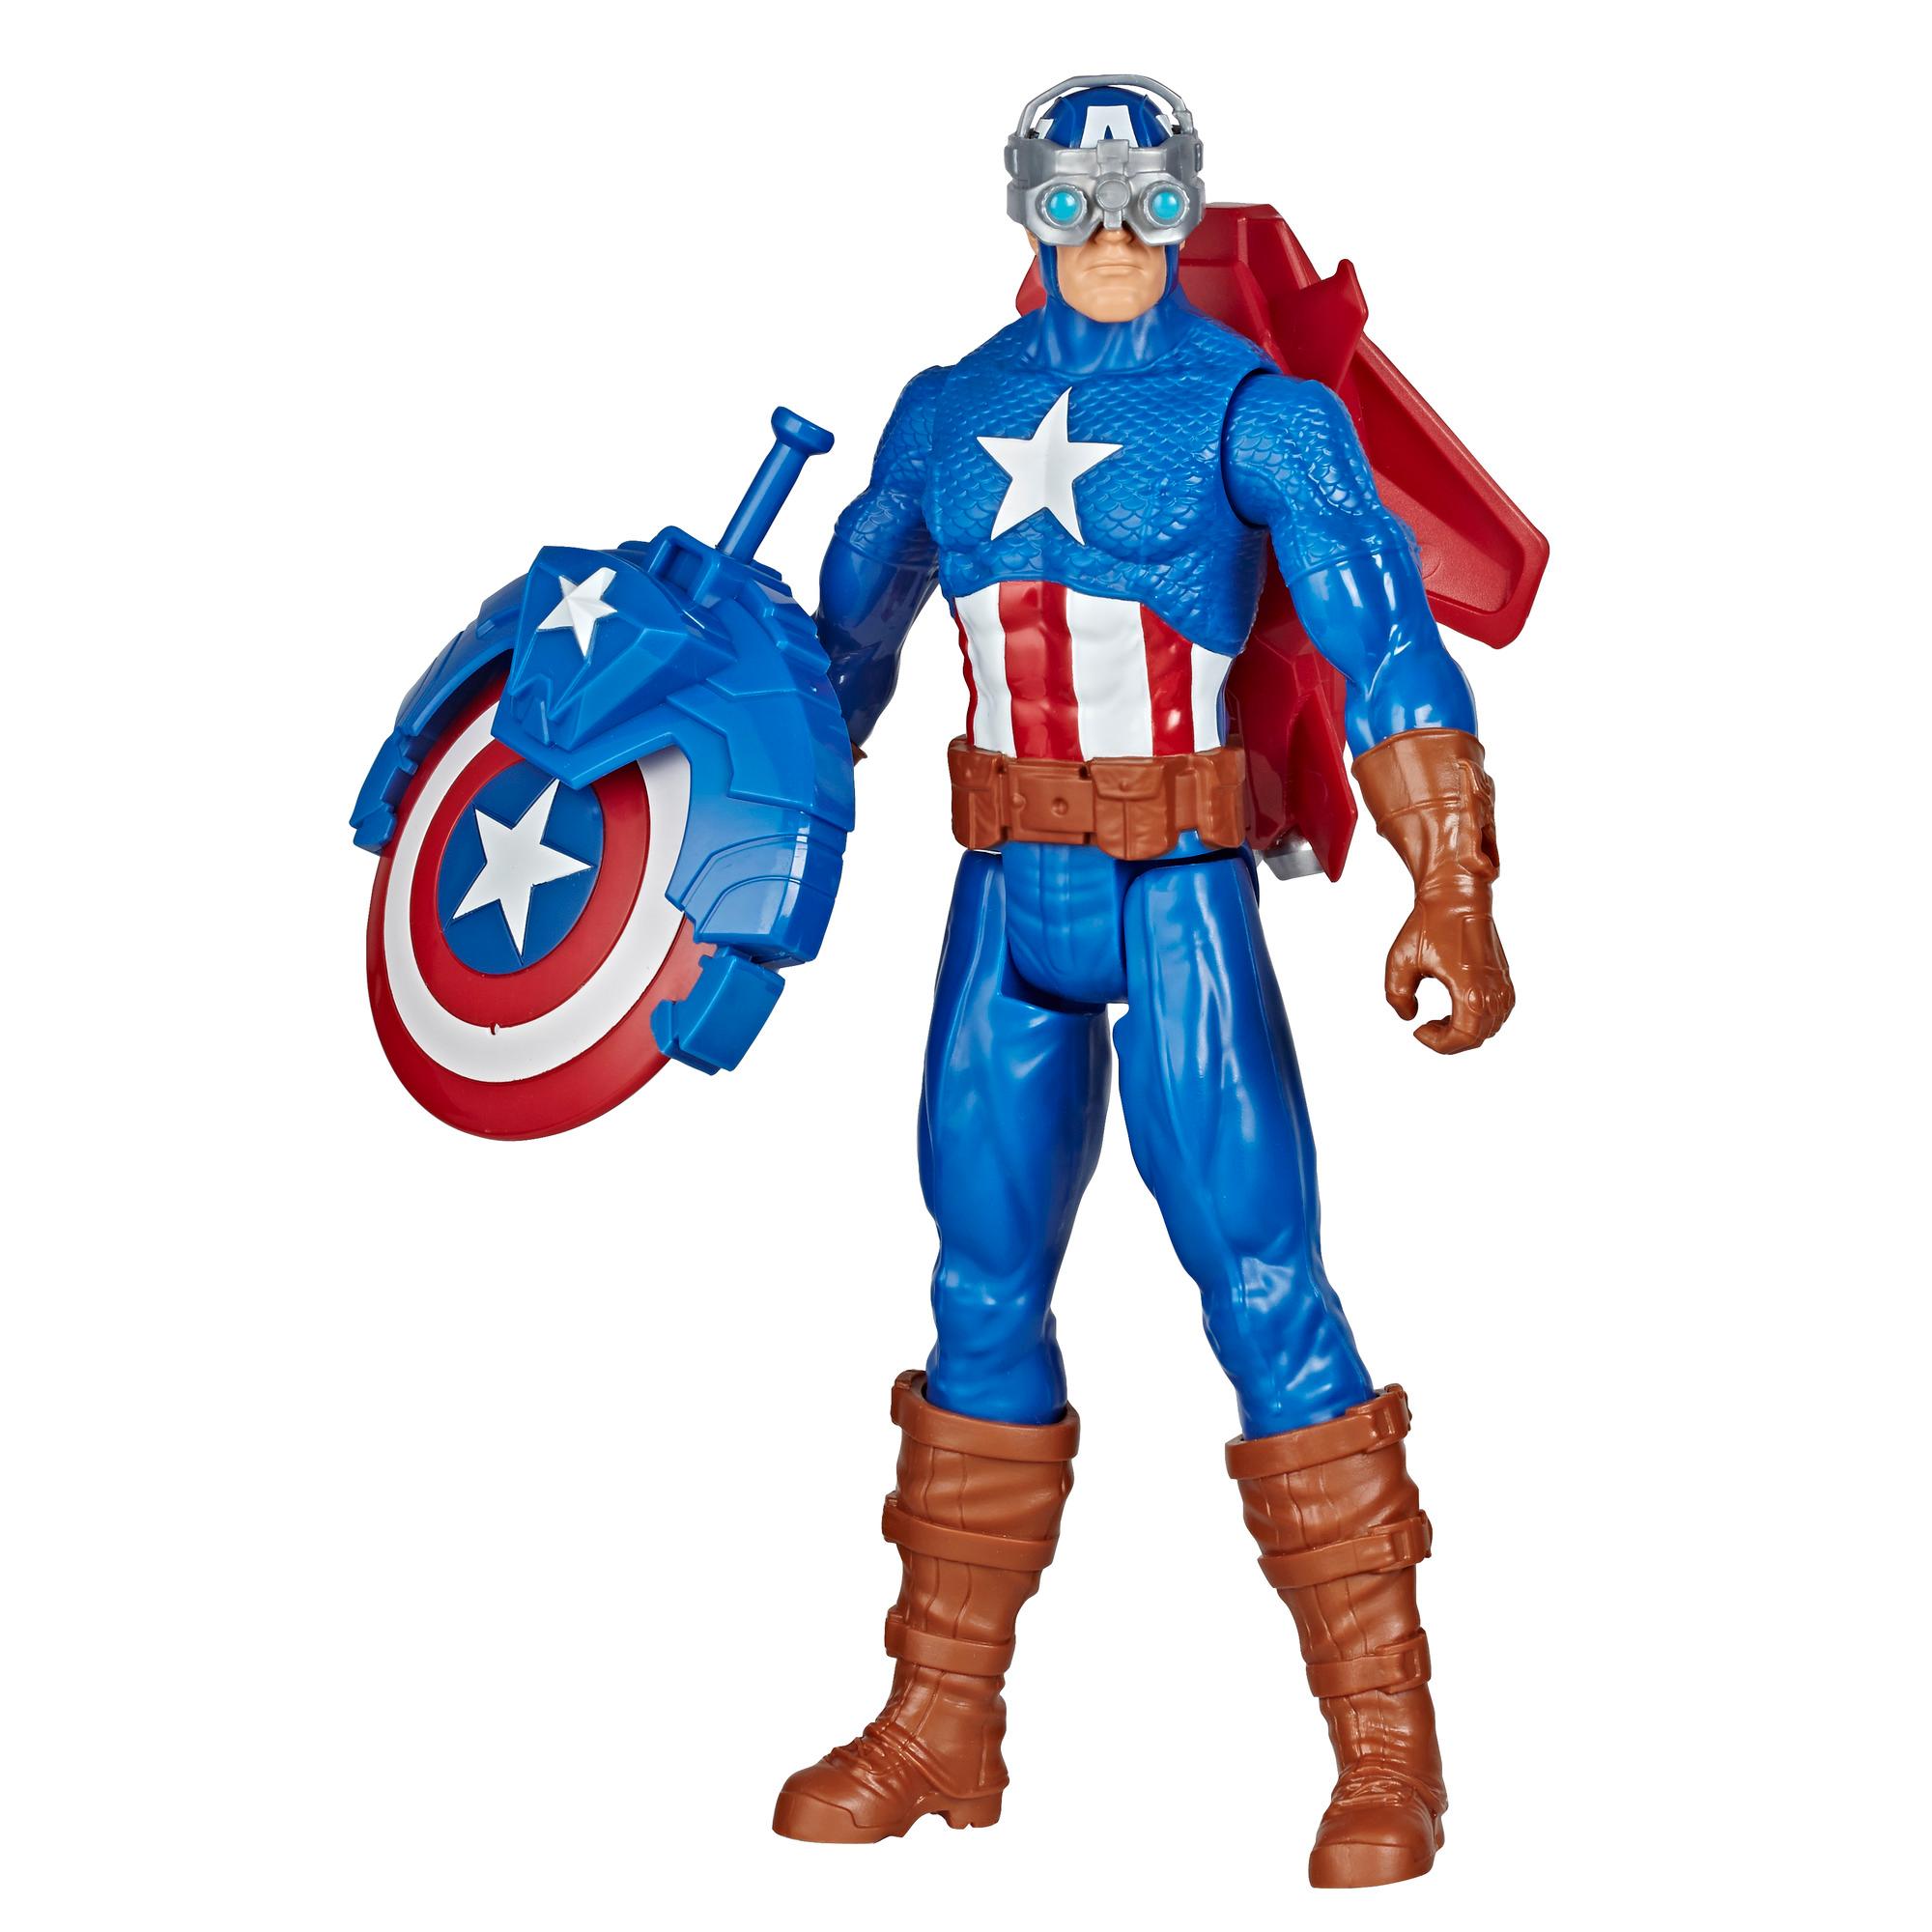 Marvel Avengers Captain America Titan Super Hero Series Action Figure Toy Gift 